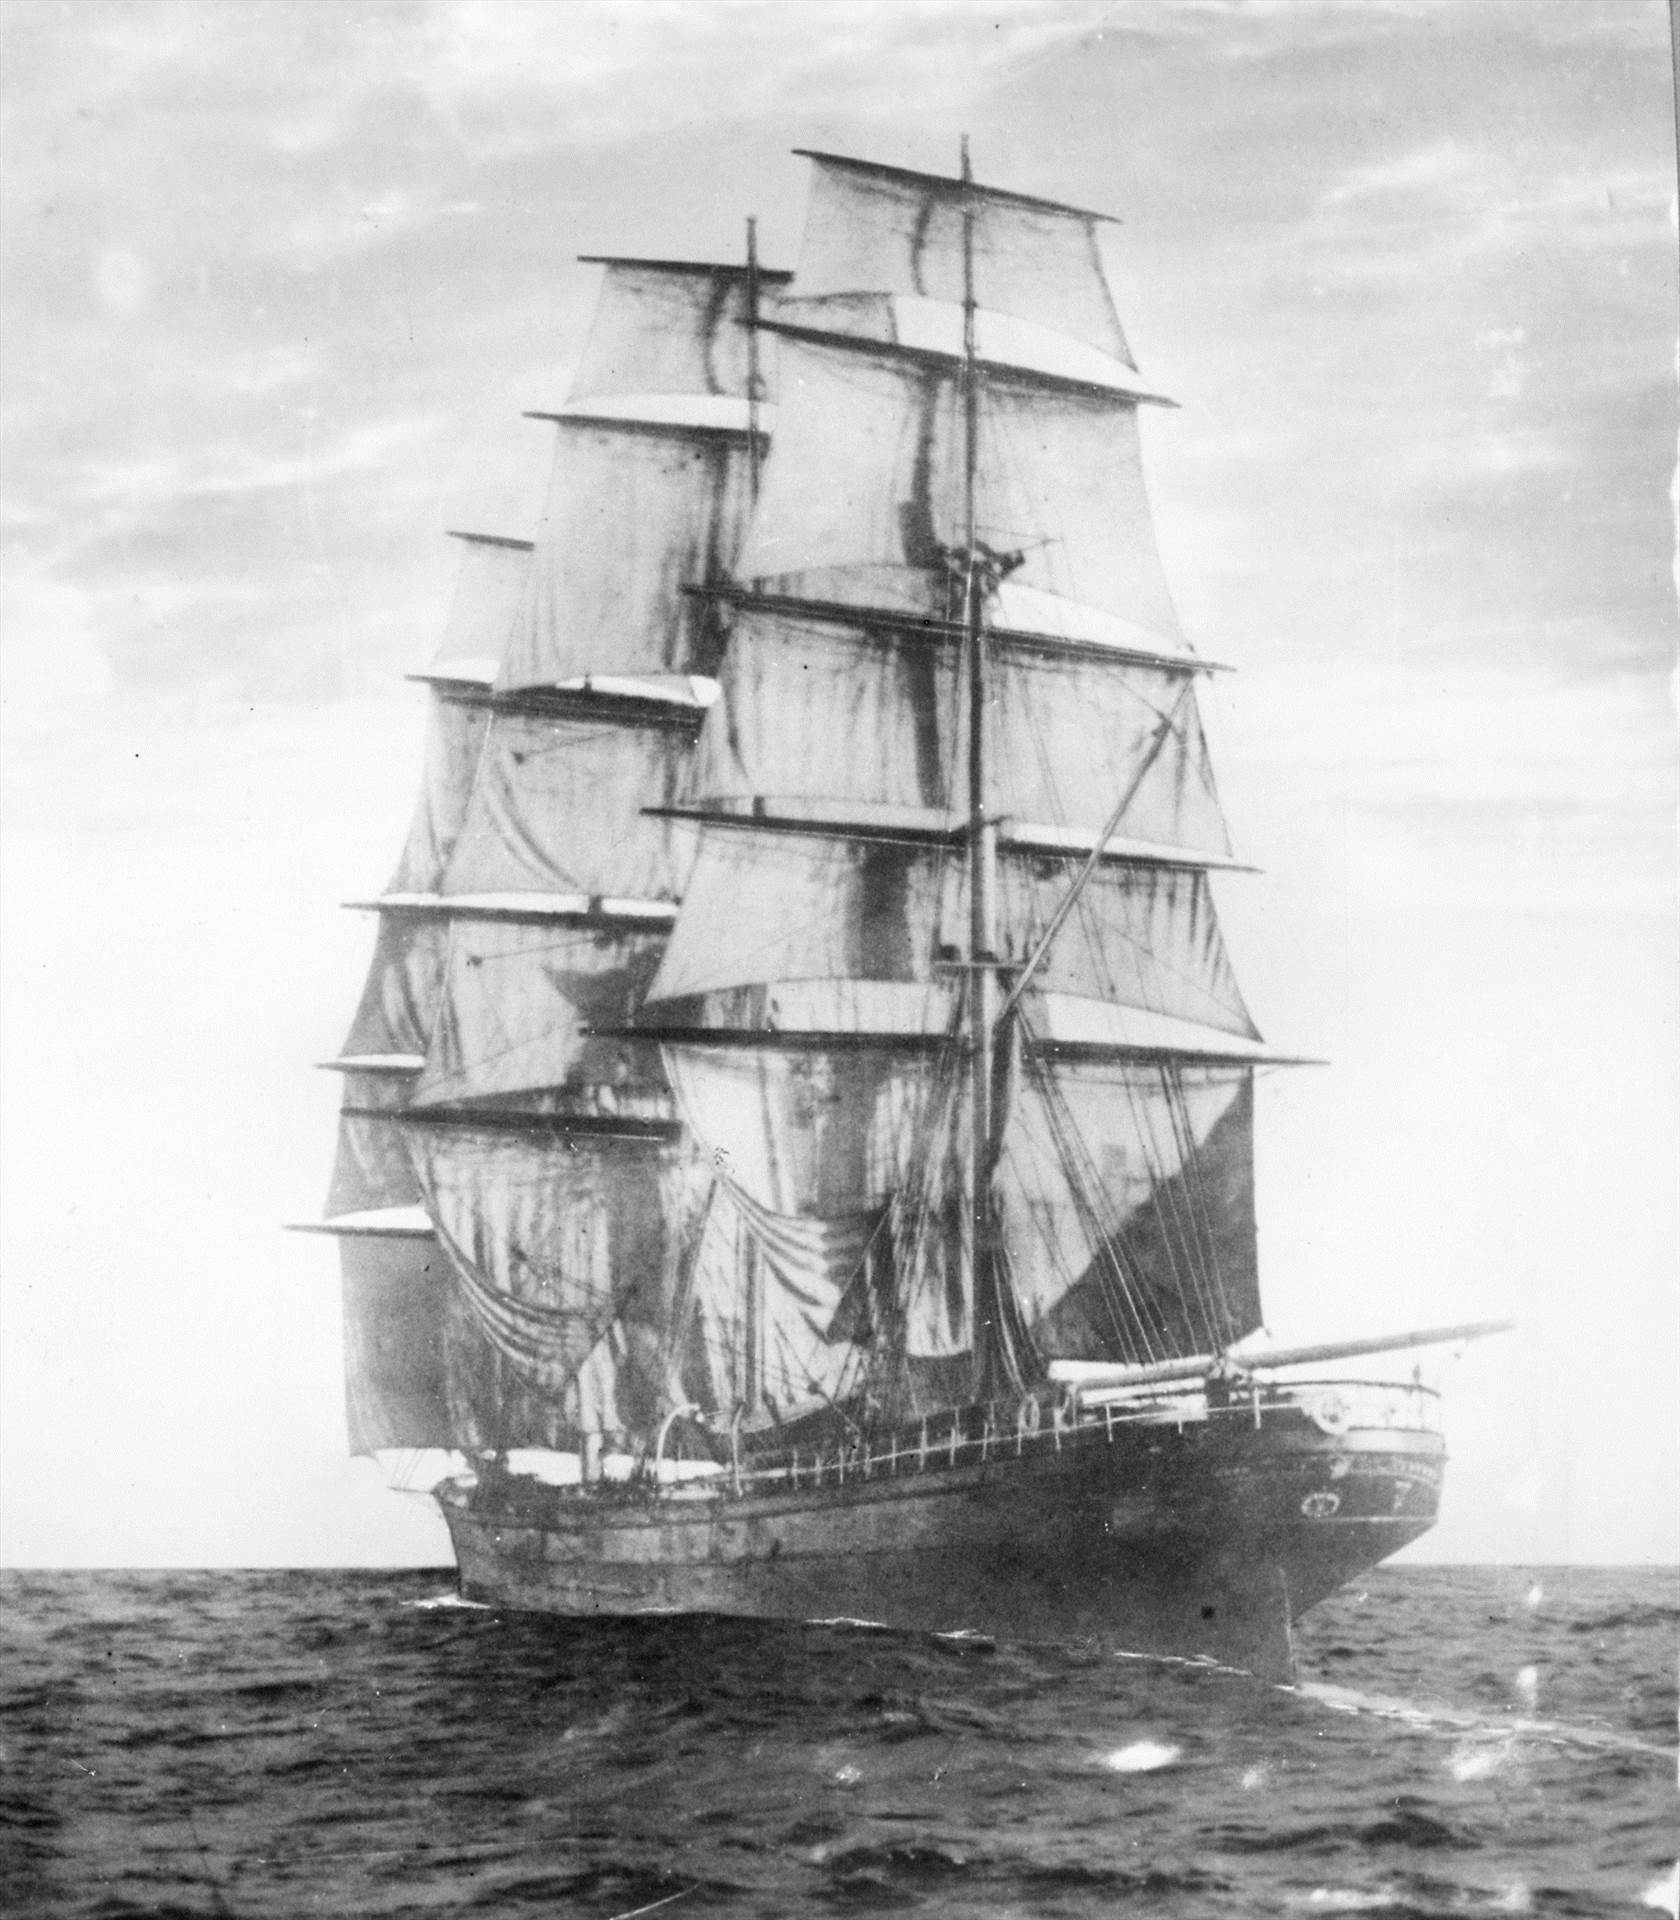 Cutty_Sark_(ship,_1869)_-_SLV_H99.220-2364.jpg  by JohnBunker